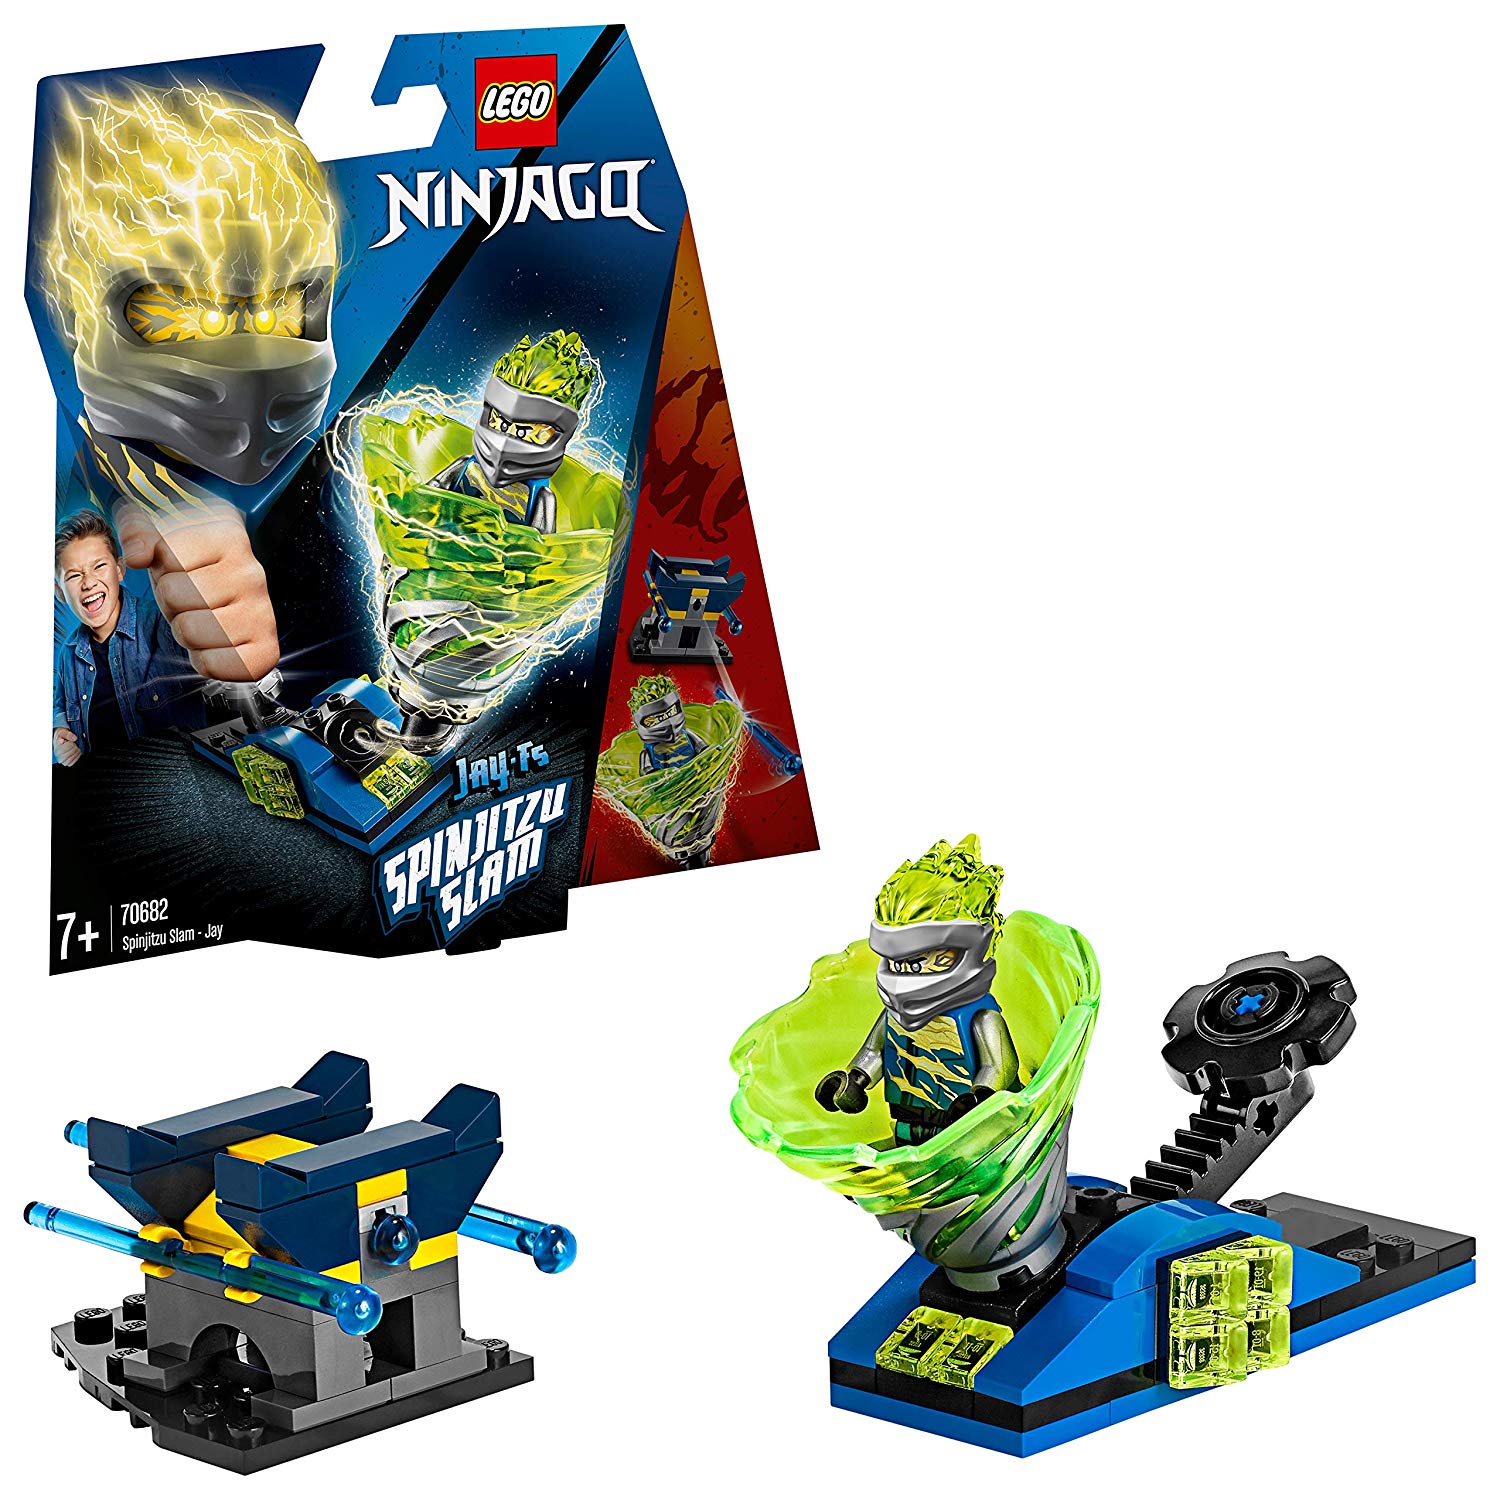 Lego Ninjago 70682 Spinjitzu Slam - Jay Construction Kit